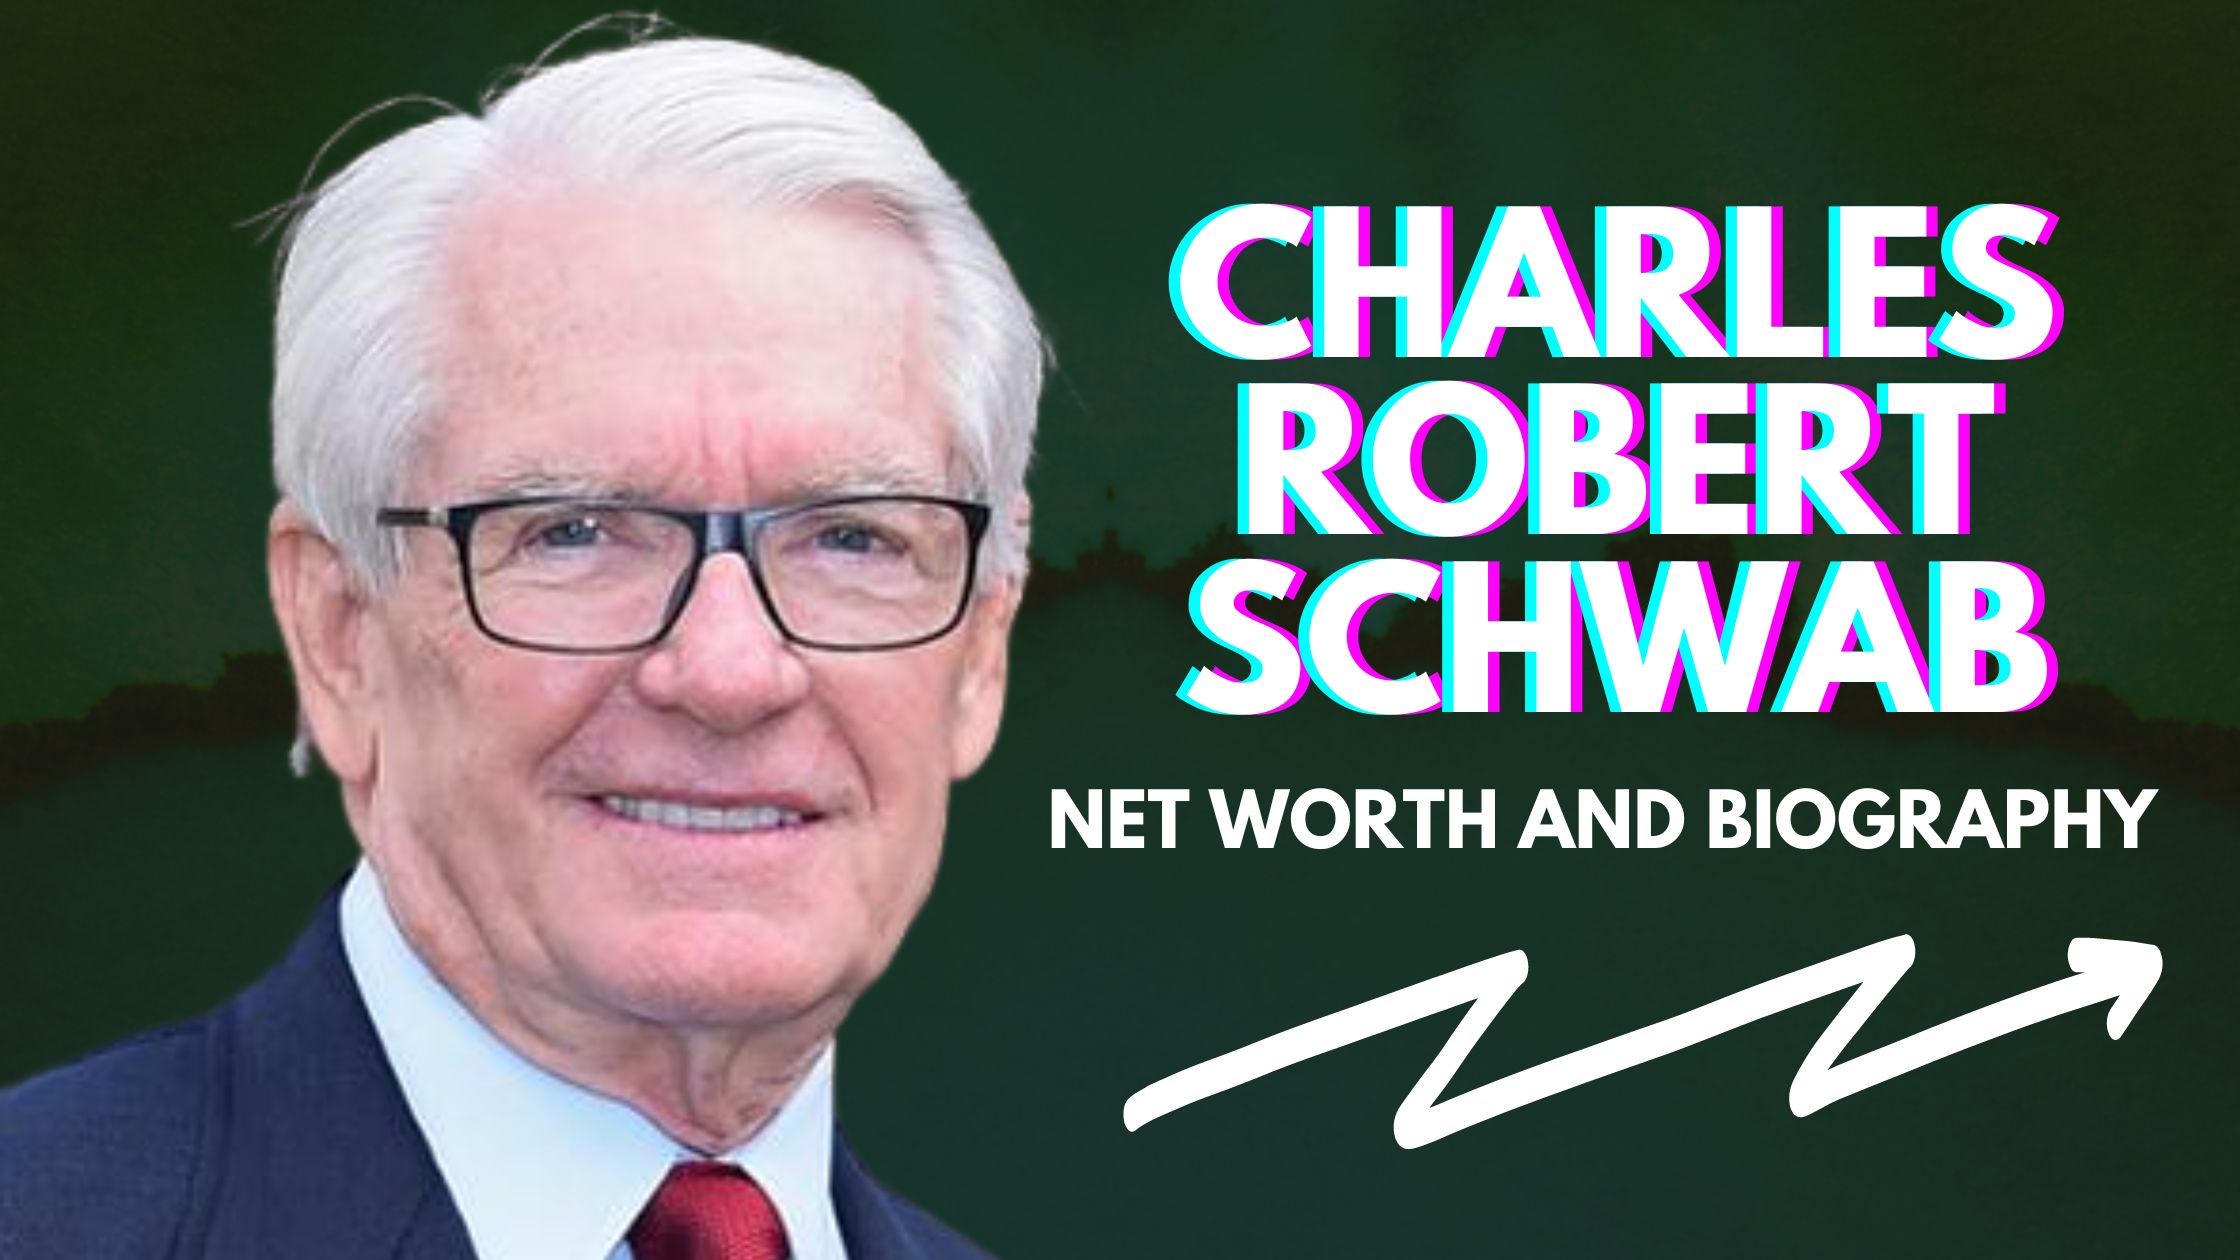 Charles Schwab net worth